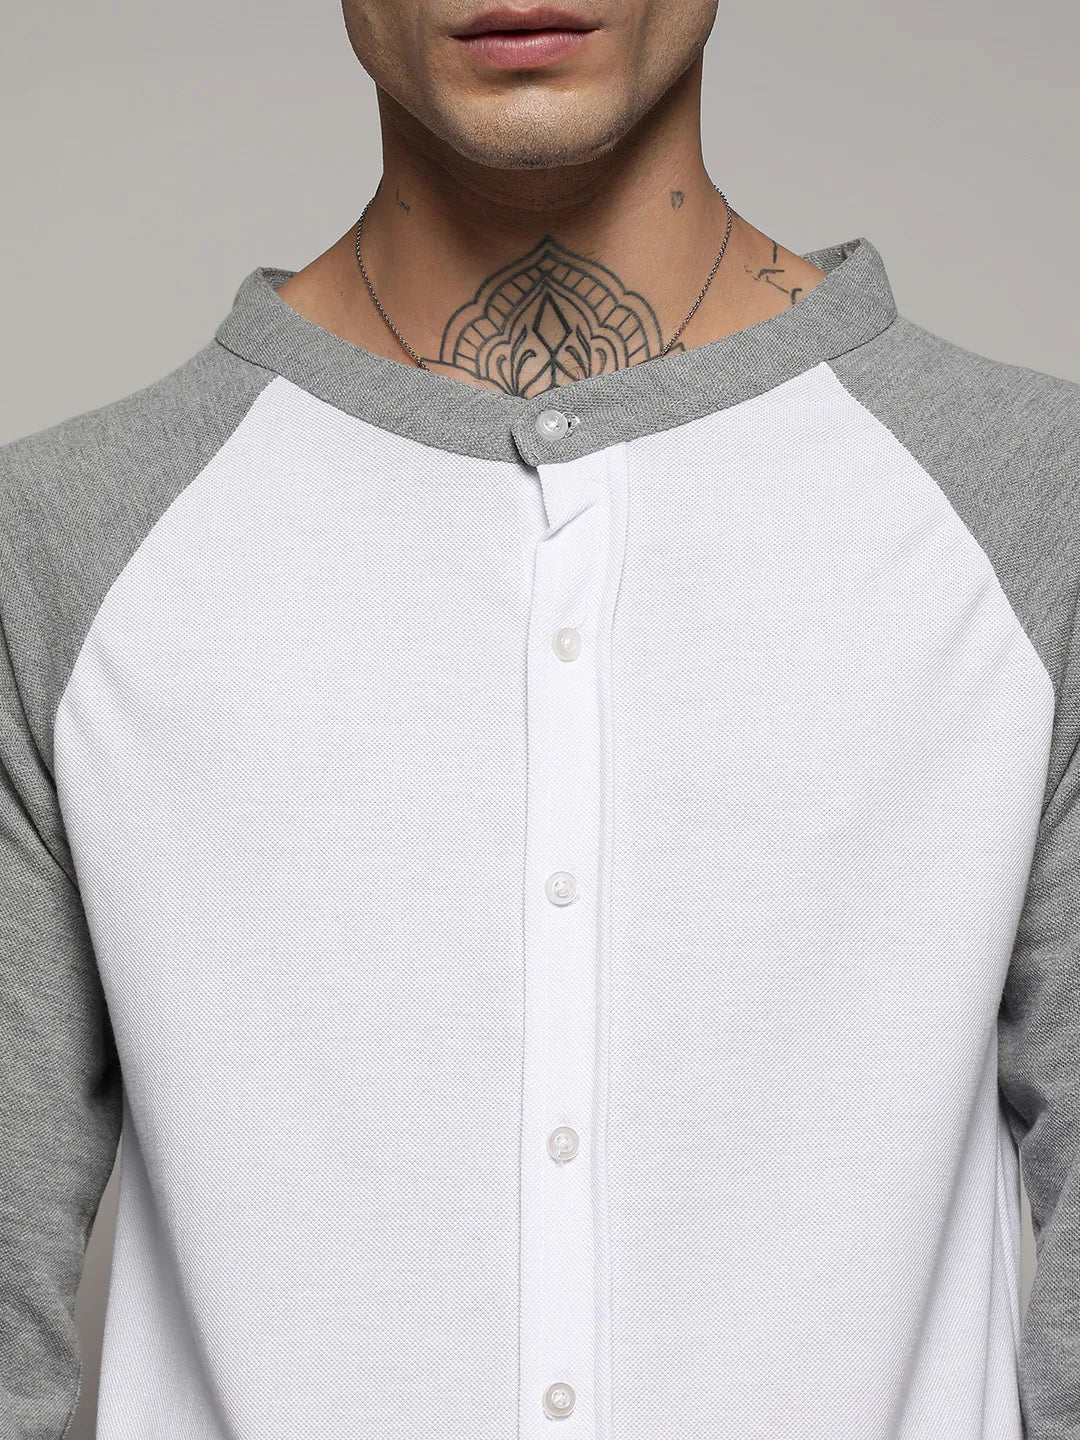 White & Grey Raglan Shirt